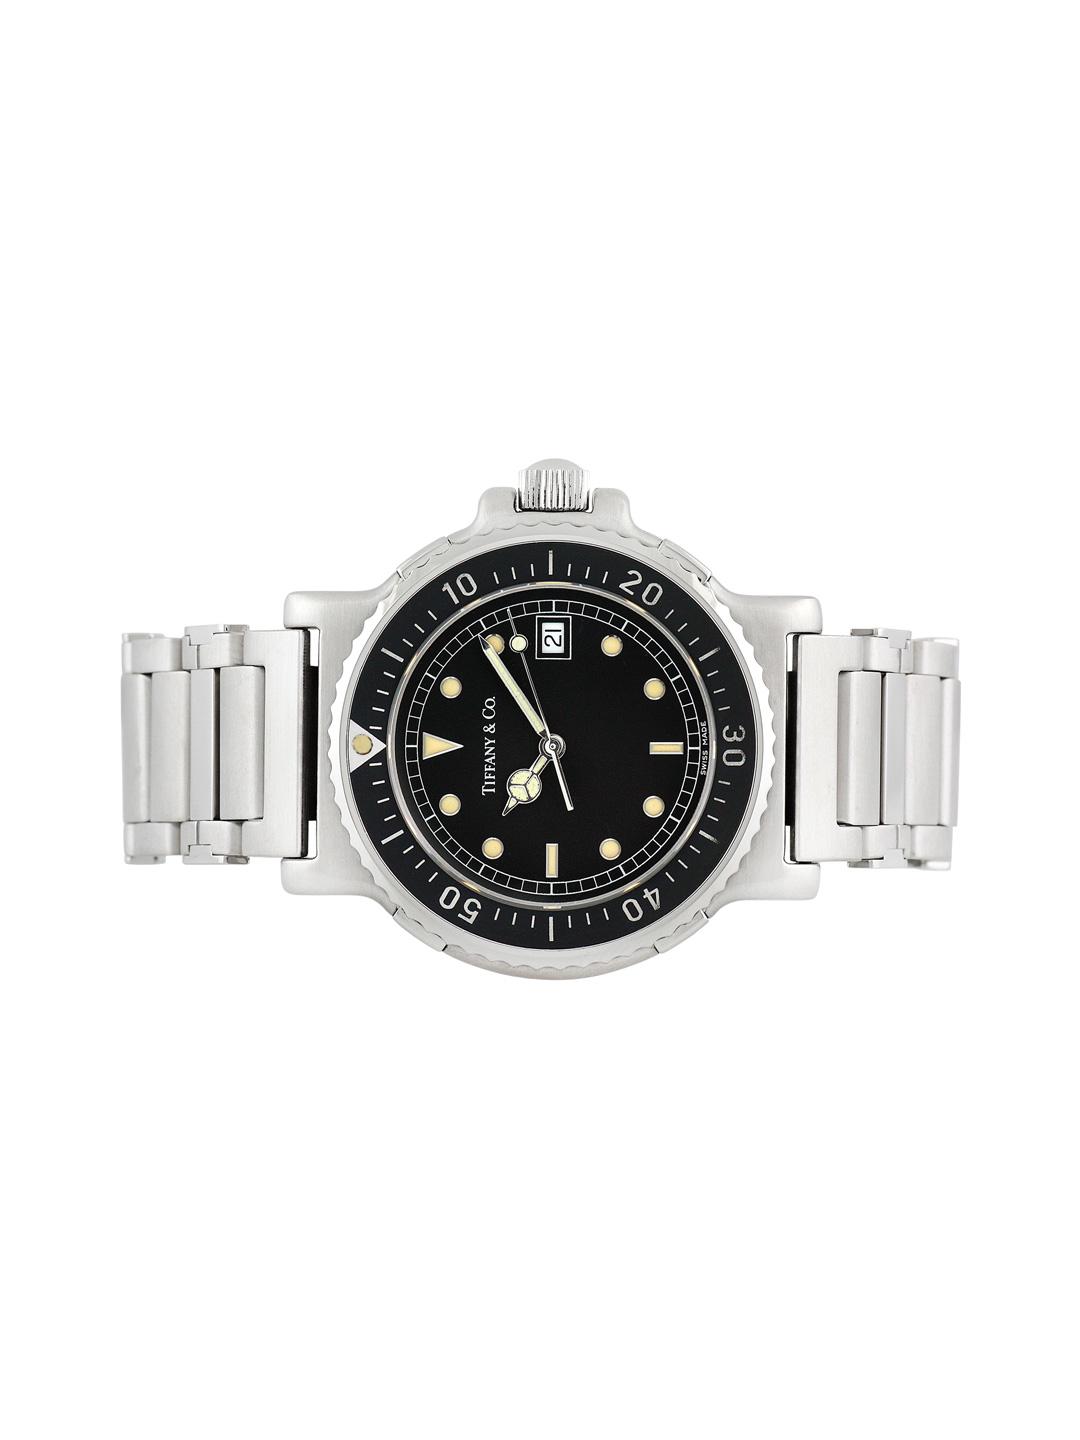 Tiffany  Co. Tiffany  Co. Diver Watch, 39mm in Black Lyst